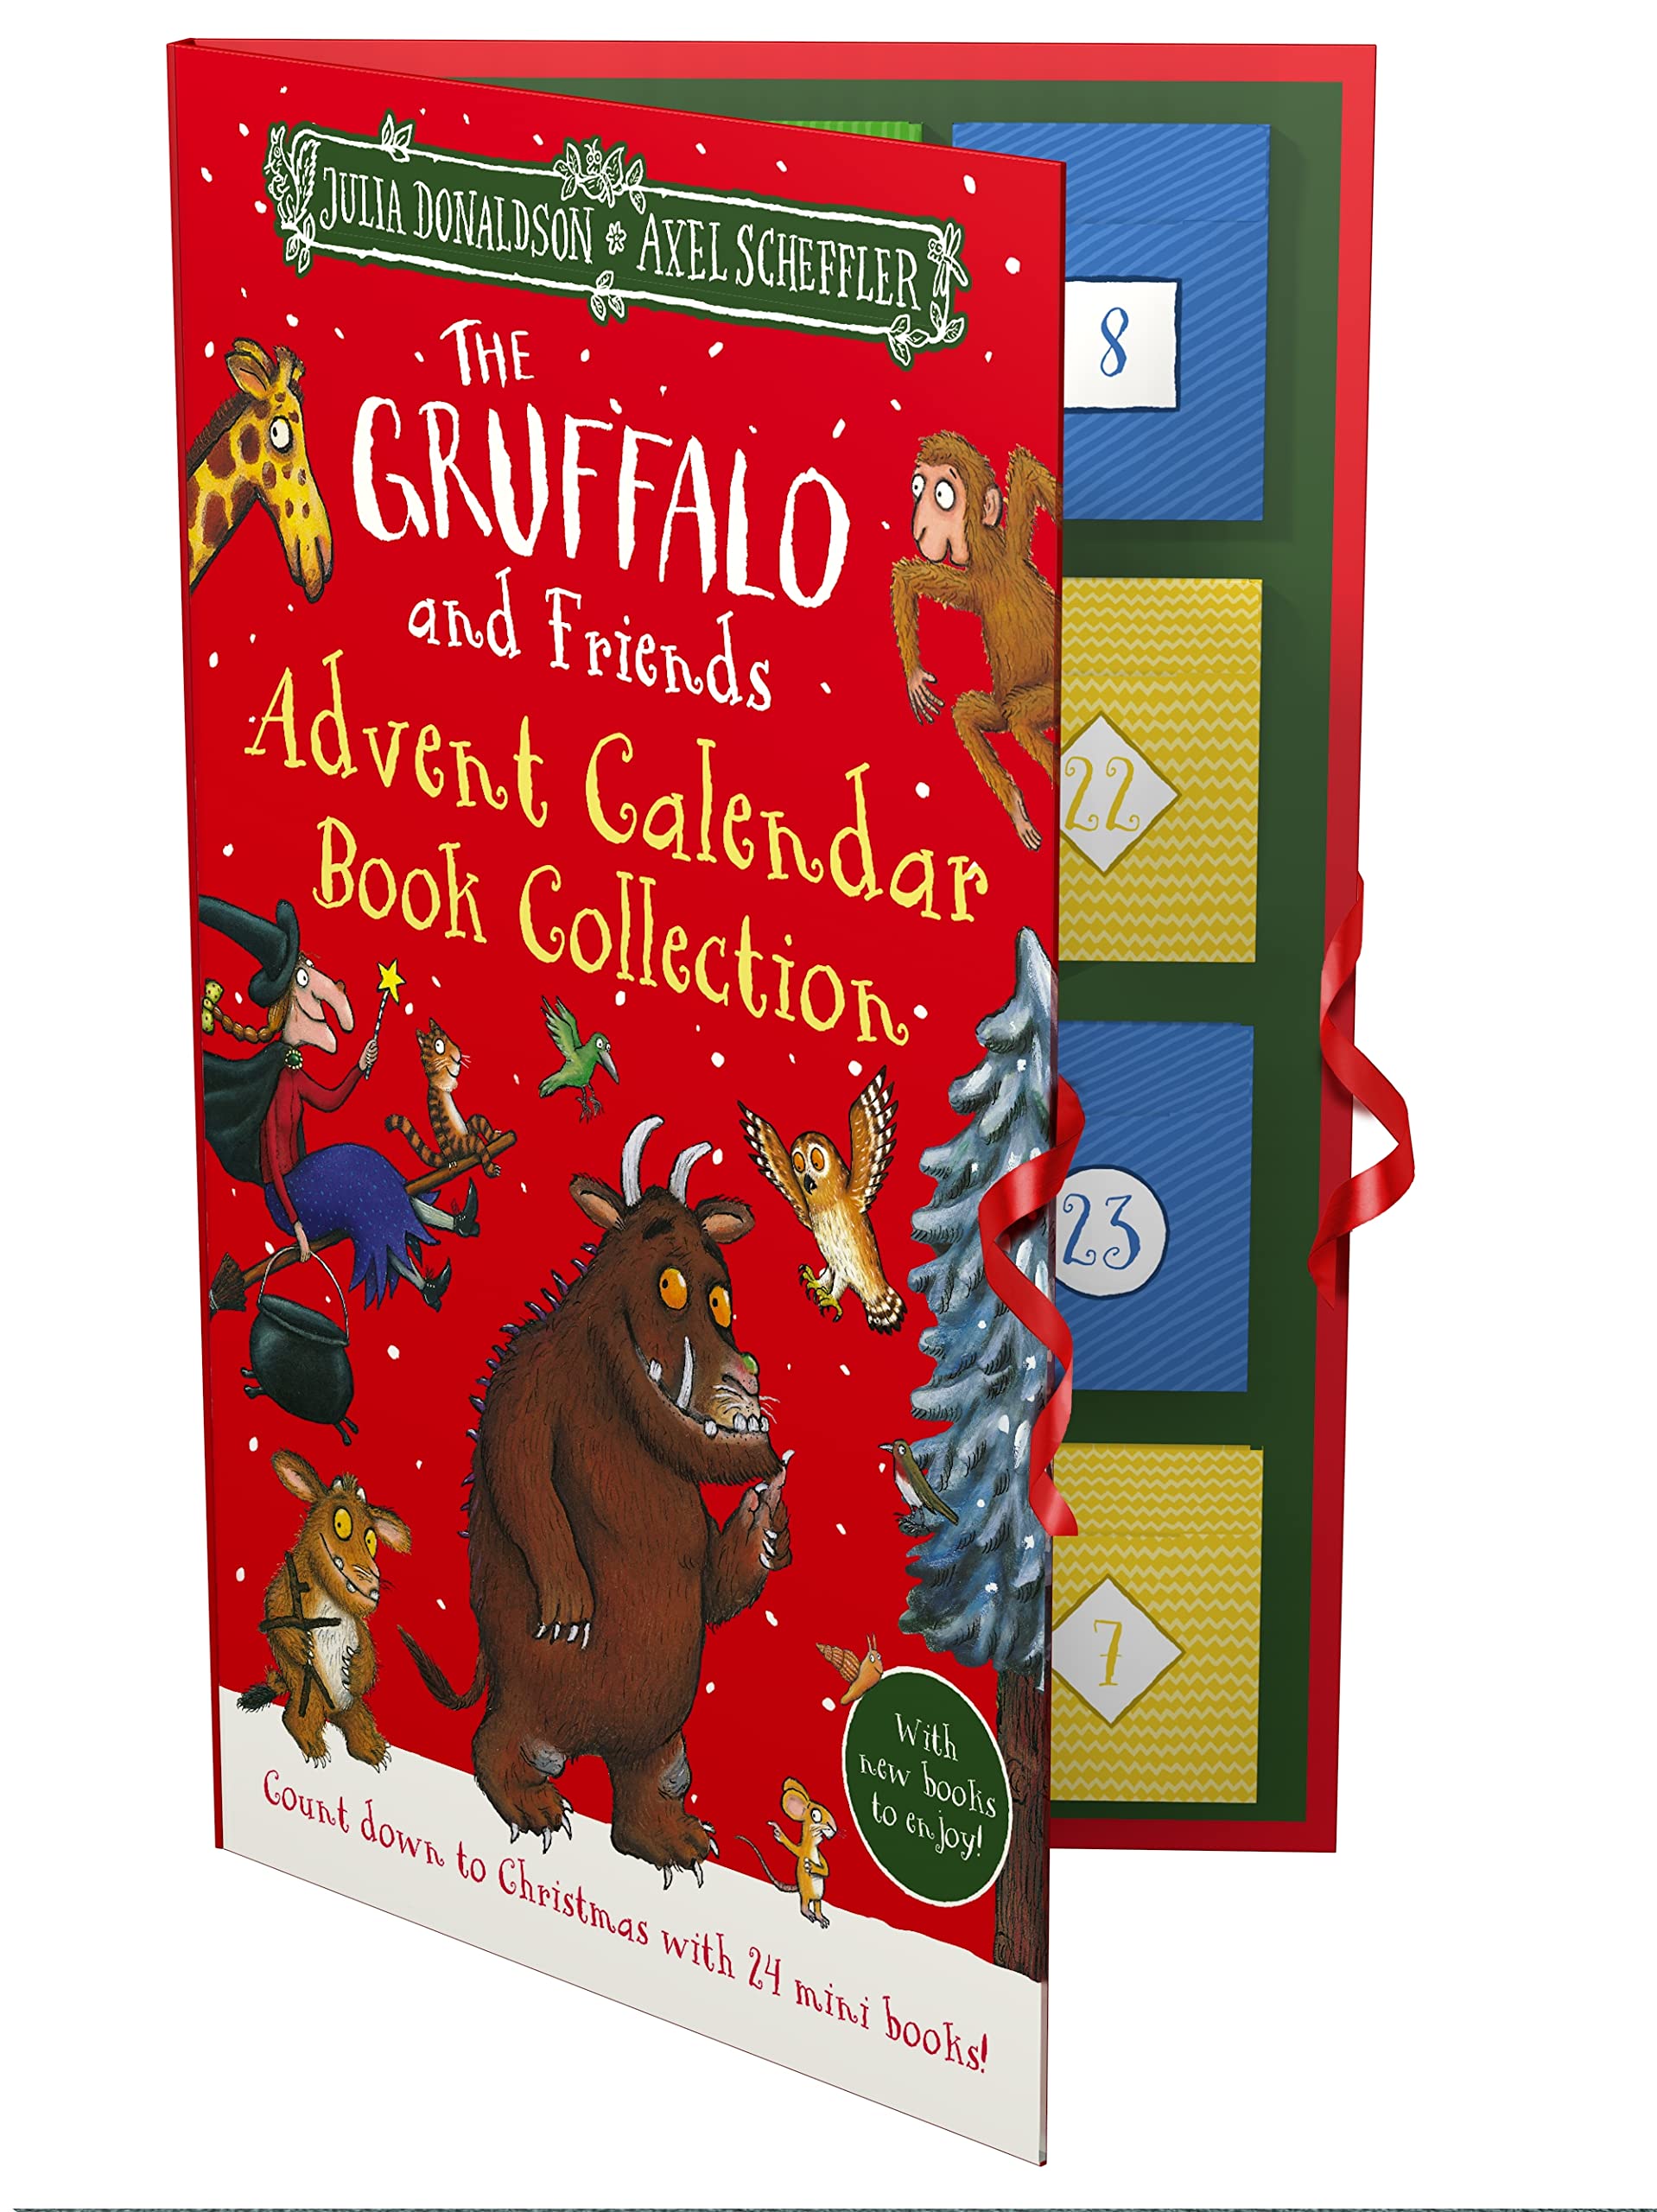 The Gruffalo and Friends Advent Calendar Book Collection Julia